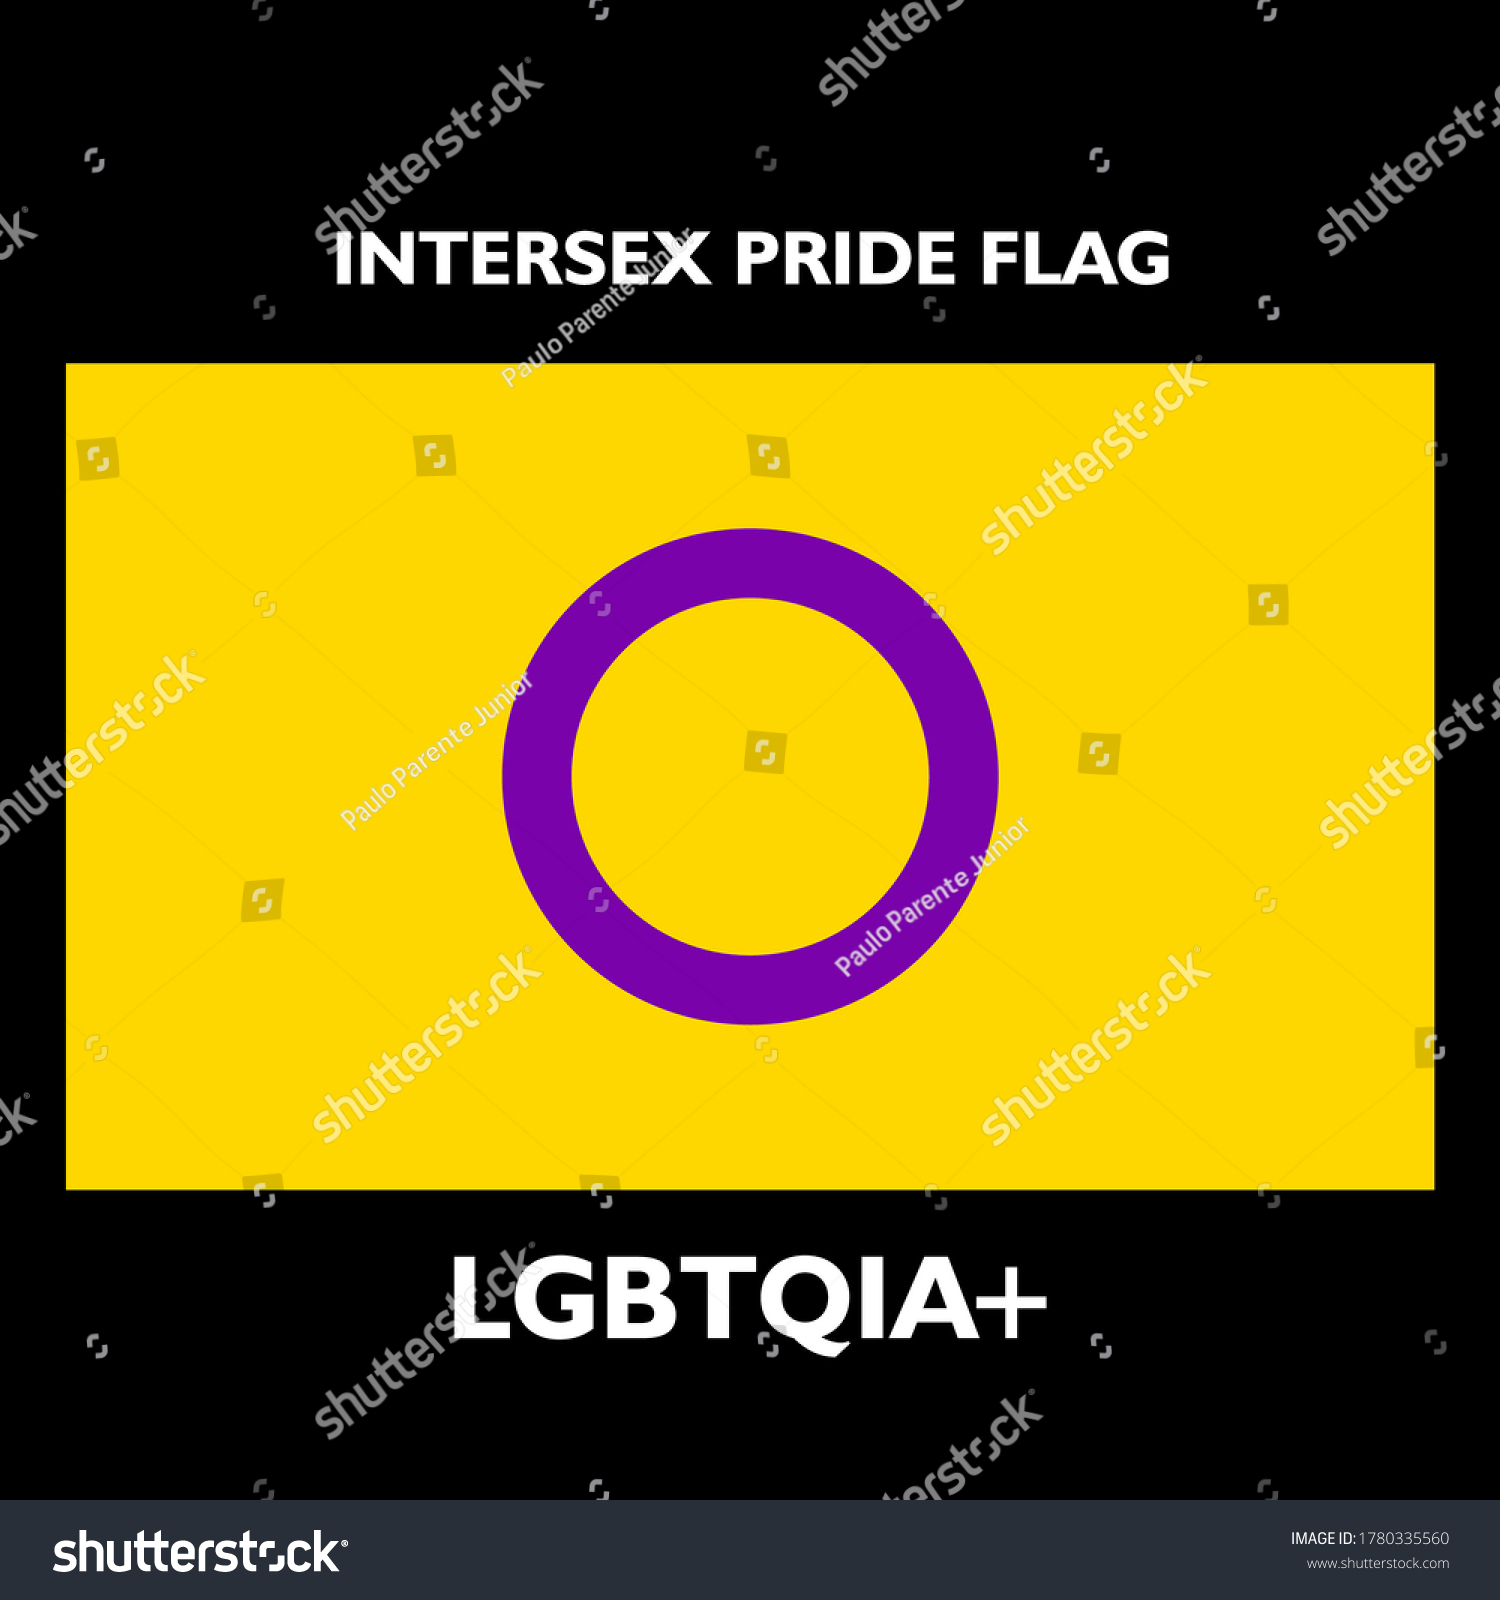 Vector Lgbt Intersex Pride Flag เวกเตอร์สต็อก ปลอดค่าลิขสิทธิ์ 1780335560 Shutterstock 4239